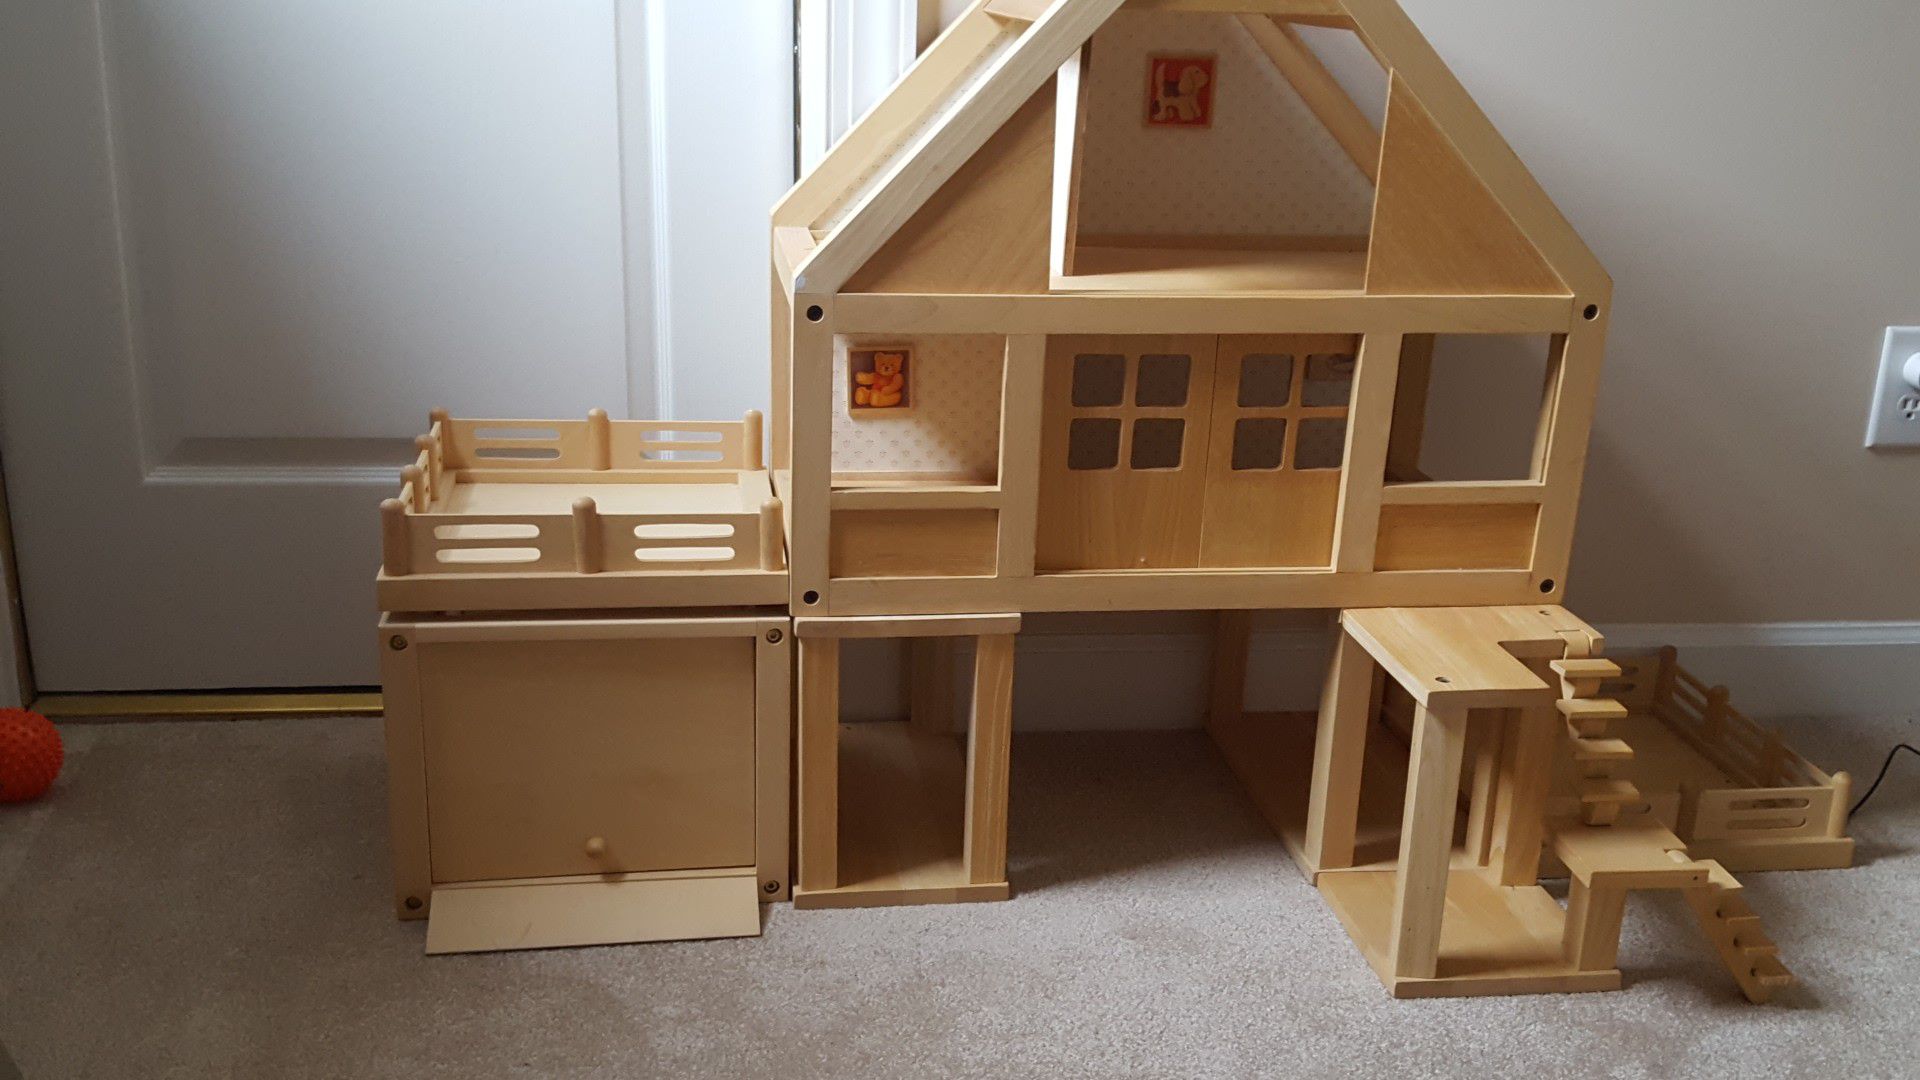 Plän Toys Wooden Doll House